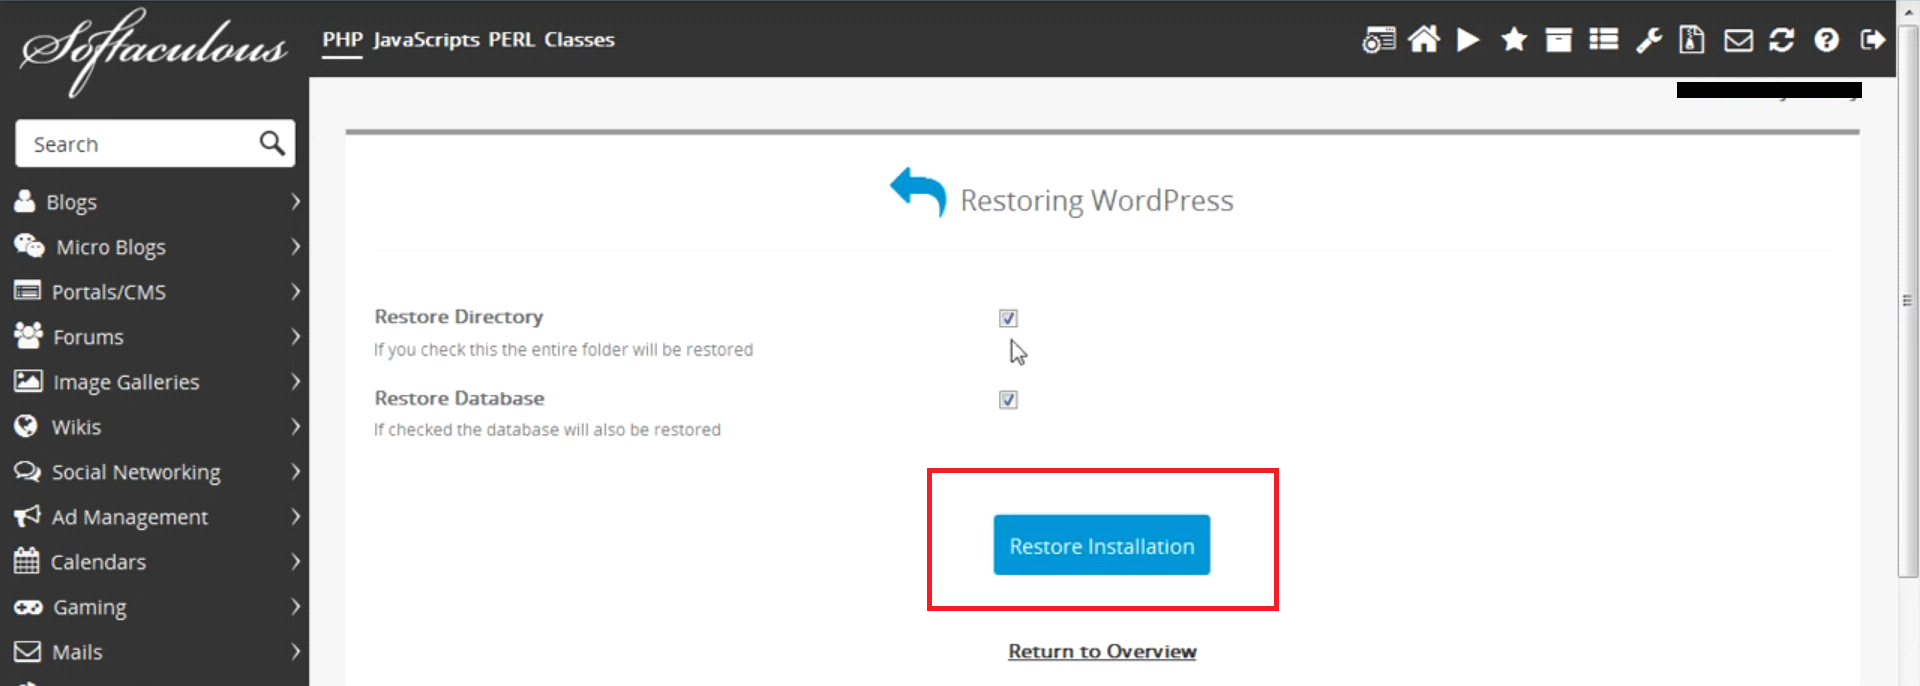 WordPress Backup Restoration from Softaculous